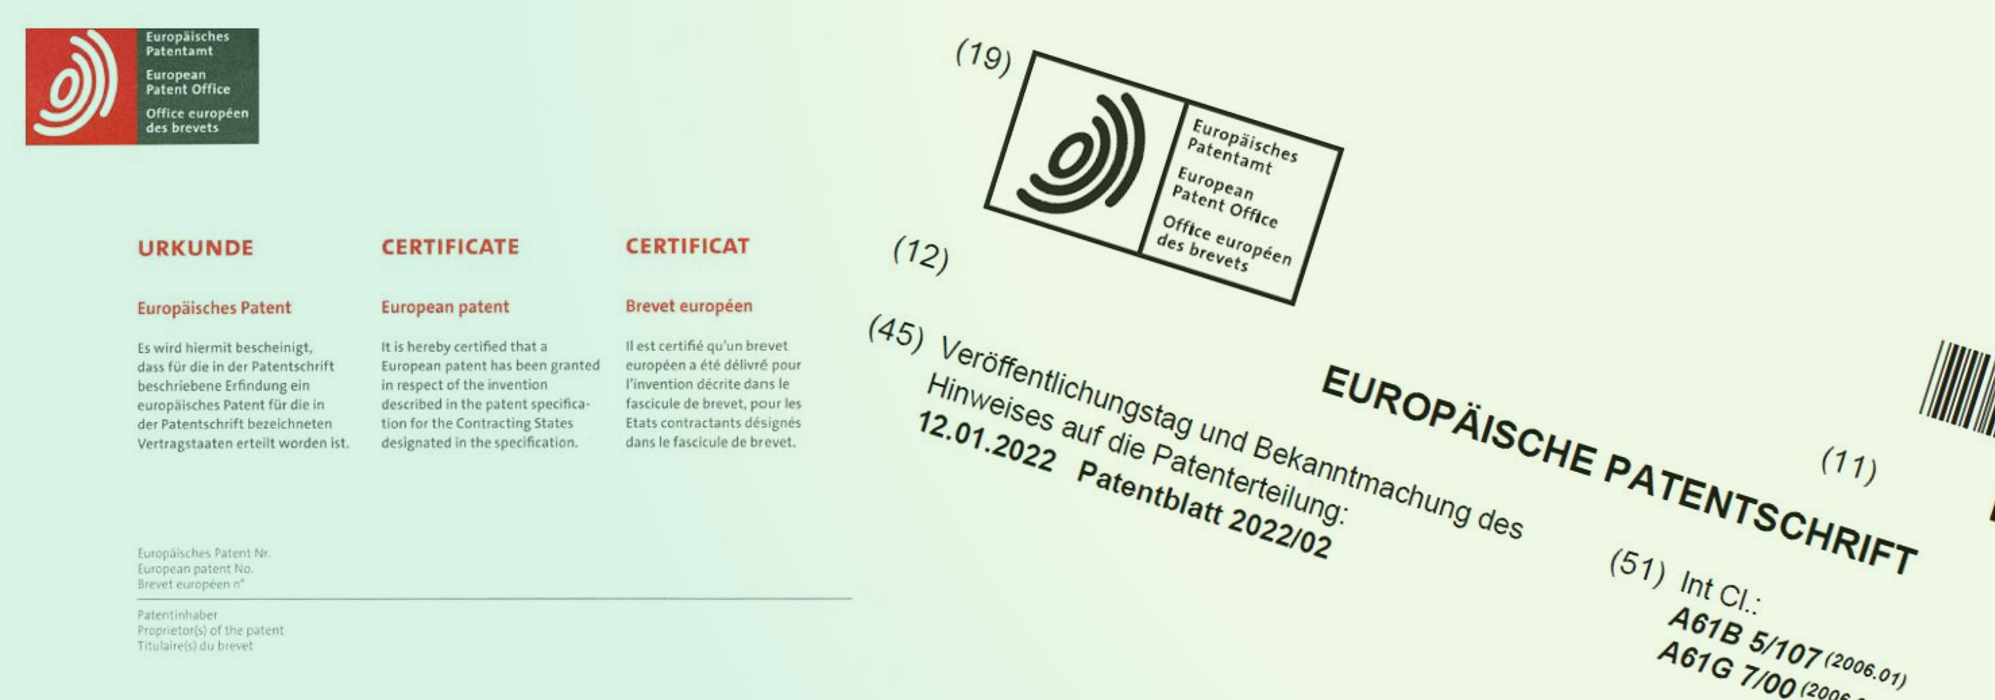 European Patent Certificate